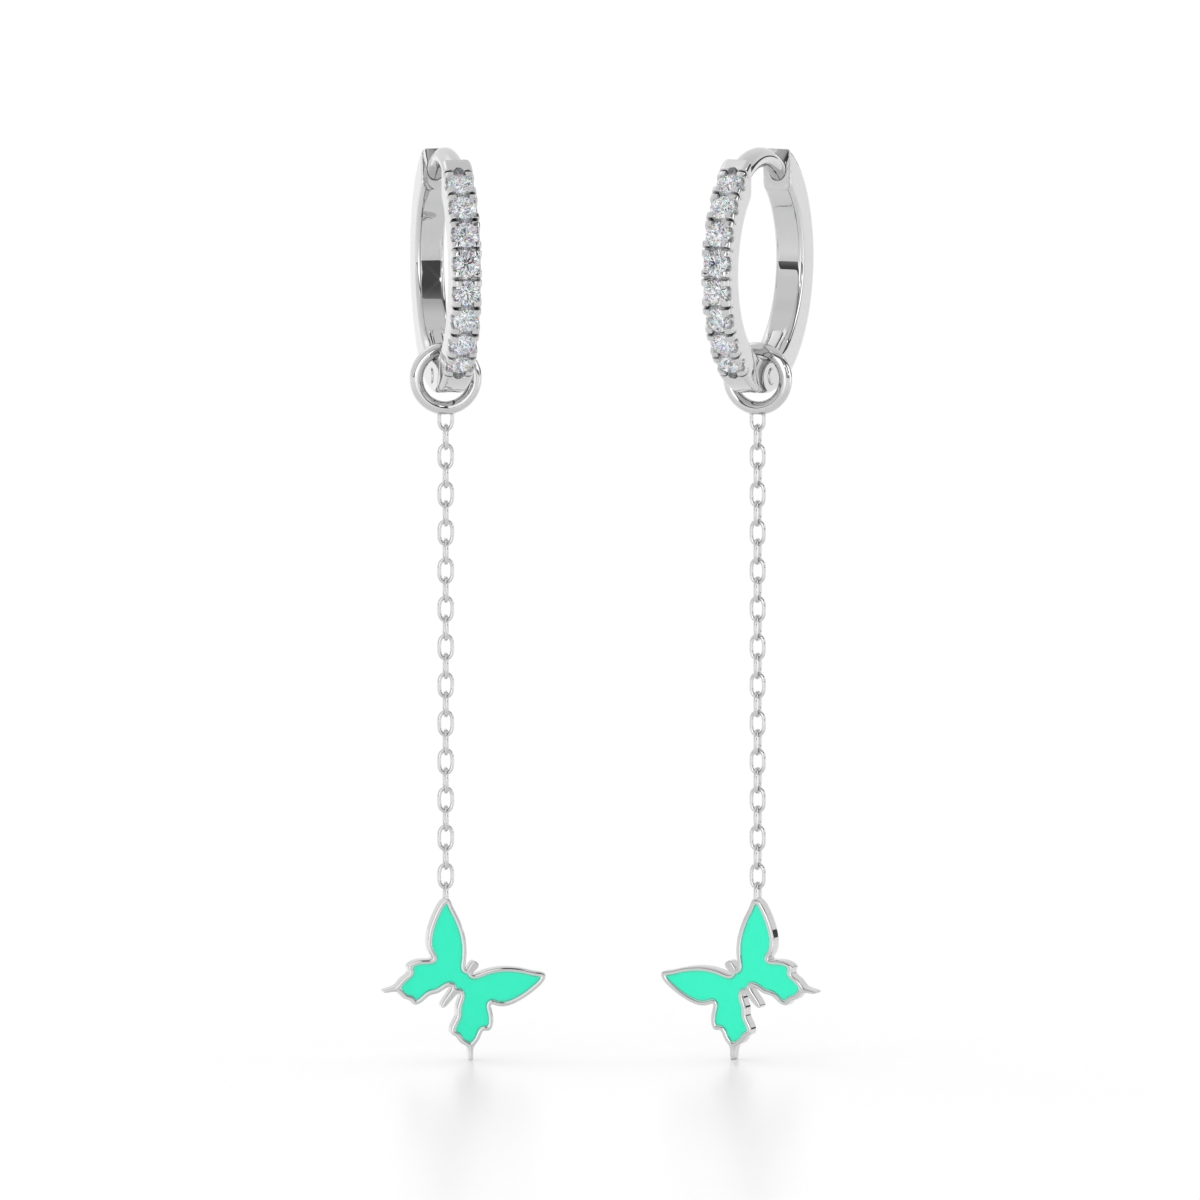 Stylish Sui Dhaga Earrings for Diwali || Mariposa Diamond  Sui Dhaga Earrings ||